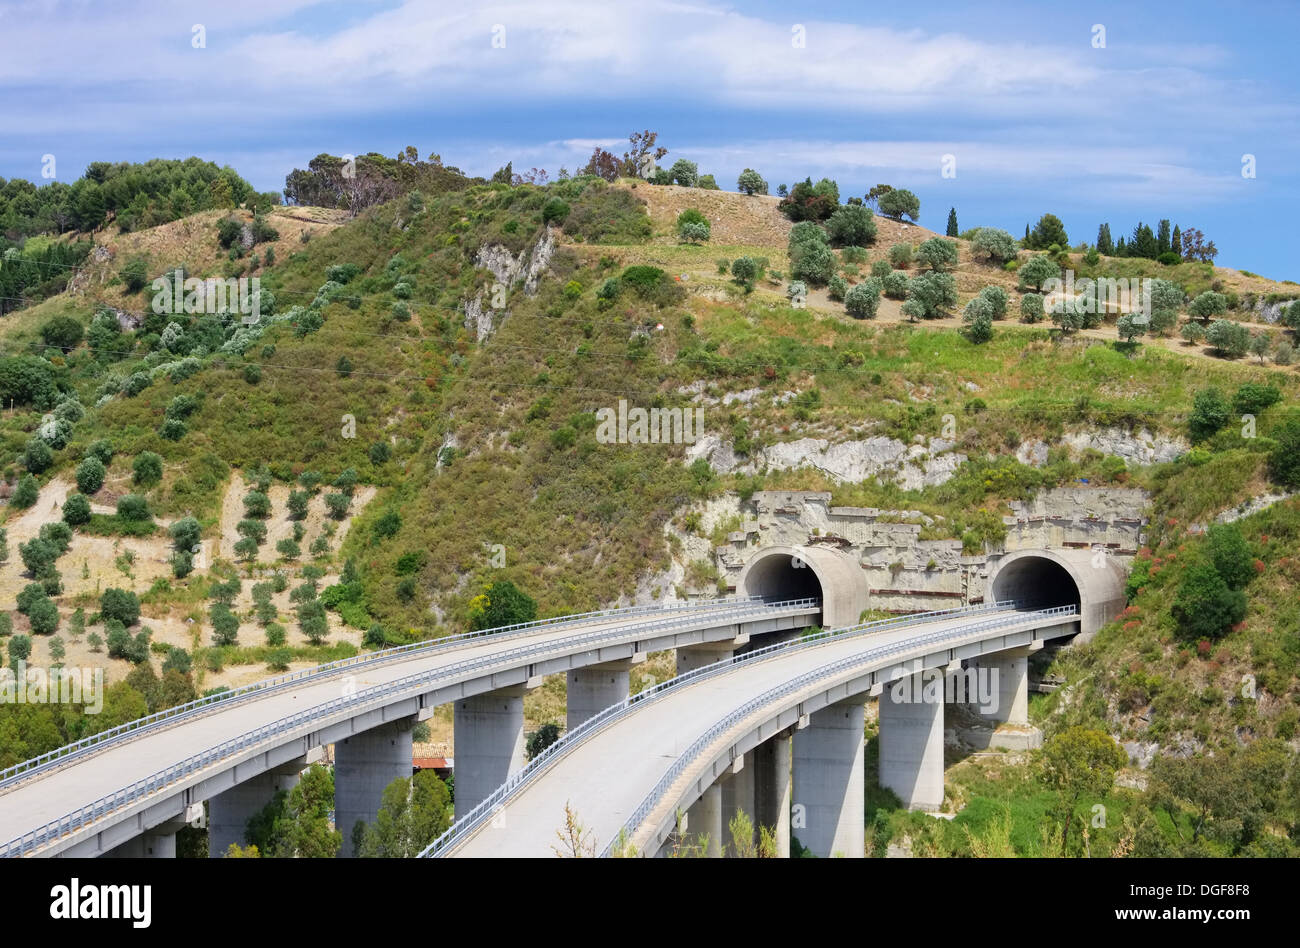 Autobahnbruecke und túnel - autopista túnel bridgeand 01 Foto de stock